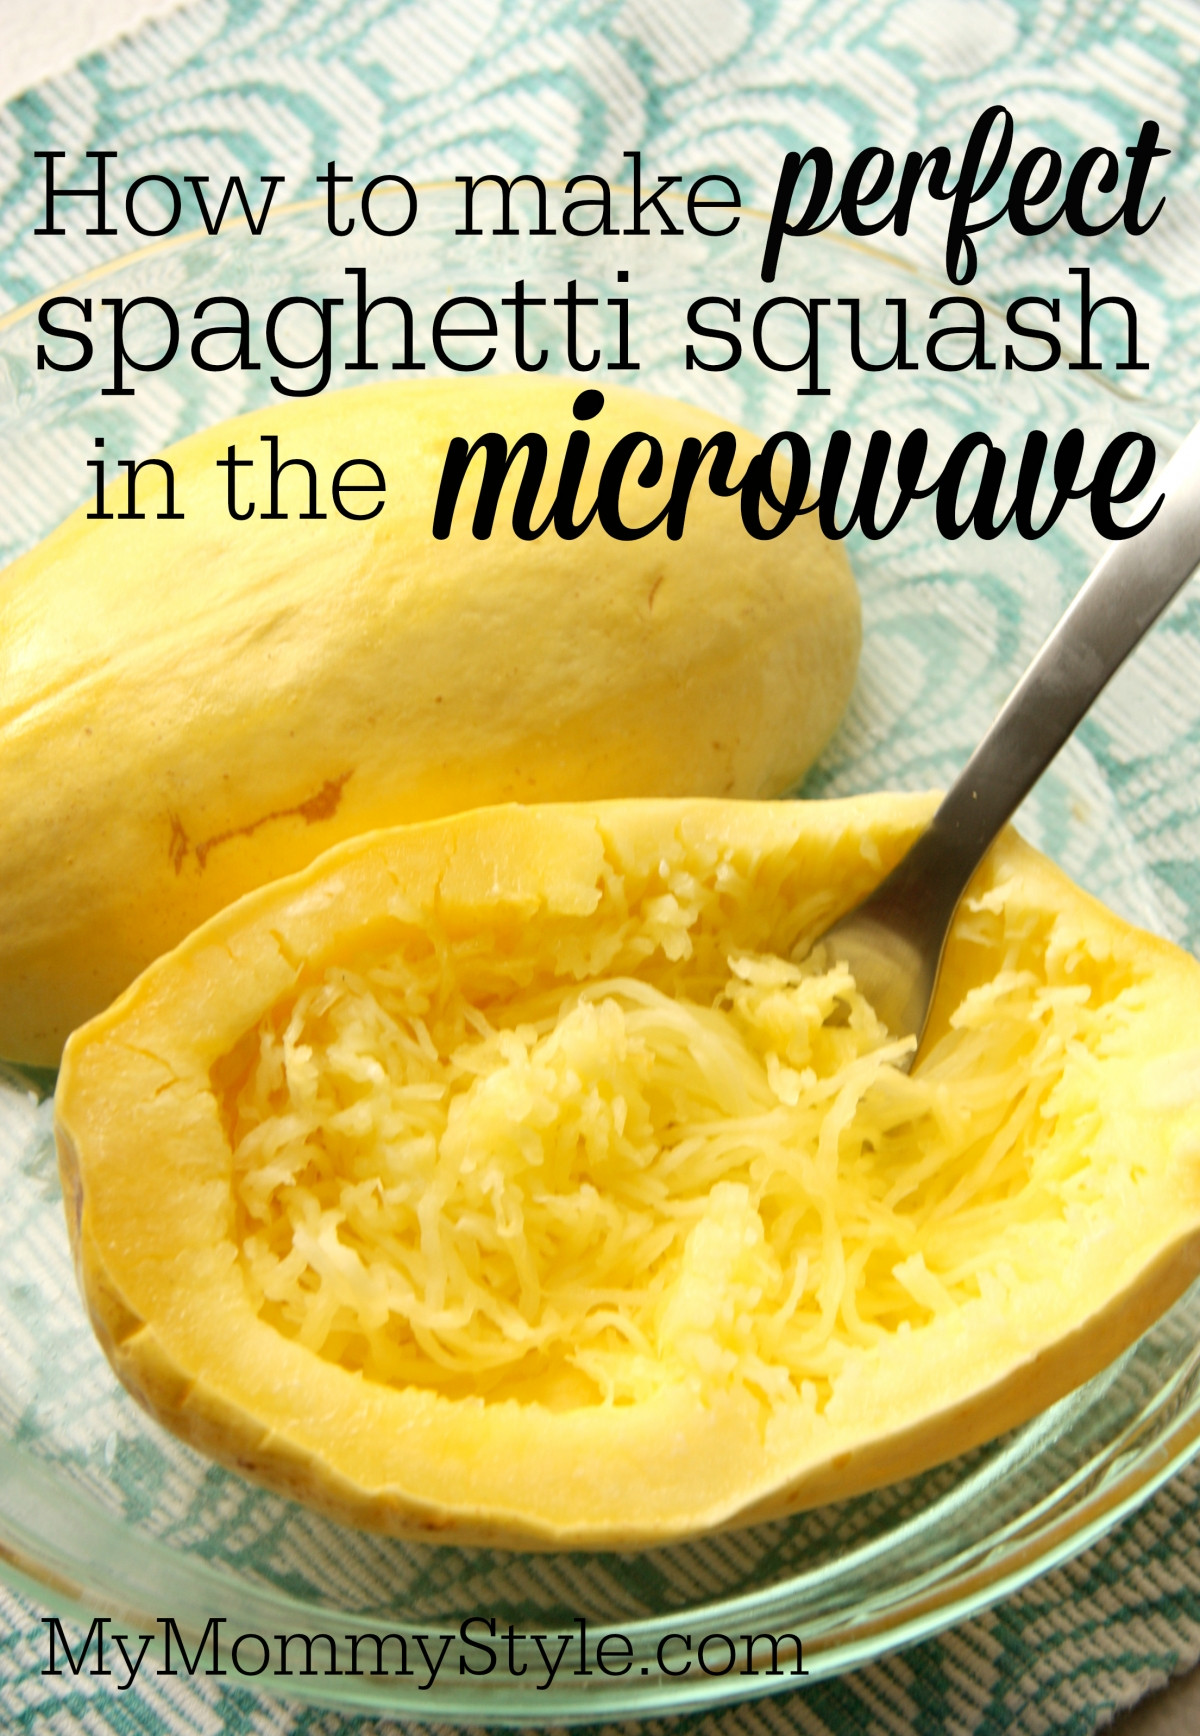 Spaghetti Squash Recipe Microwave
 SPAGHETTI SQUASH IN A MICROWAVE